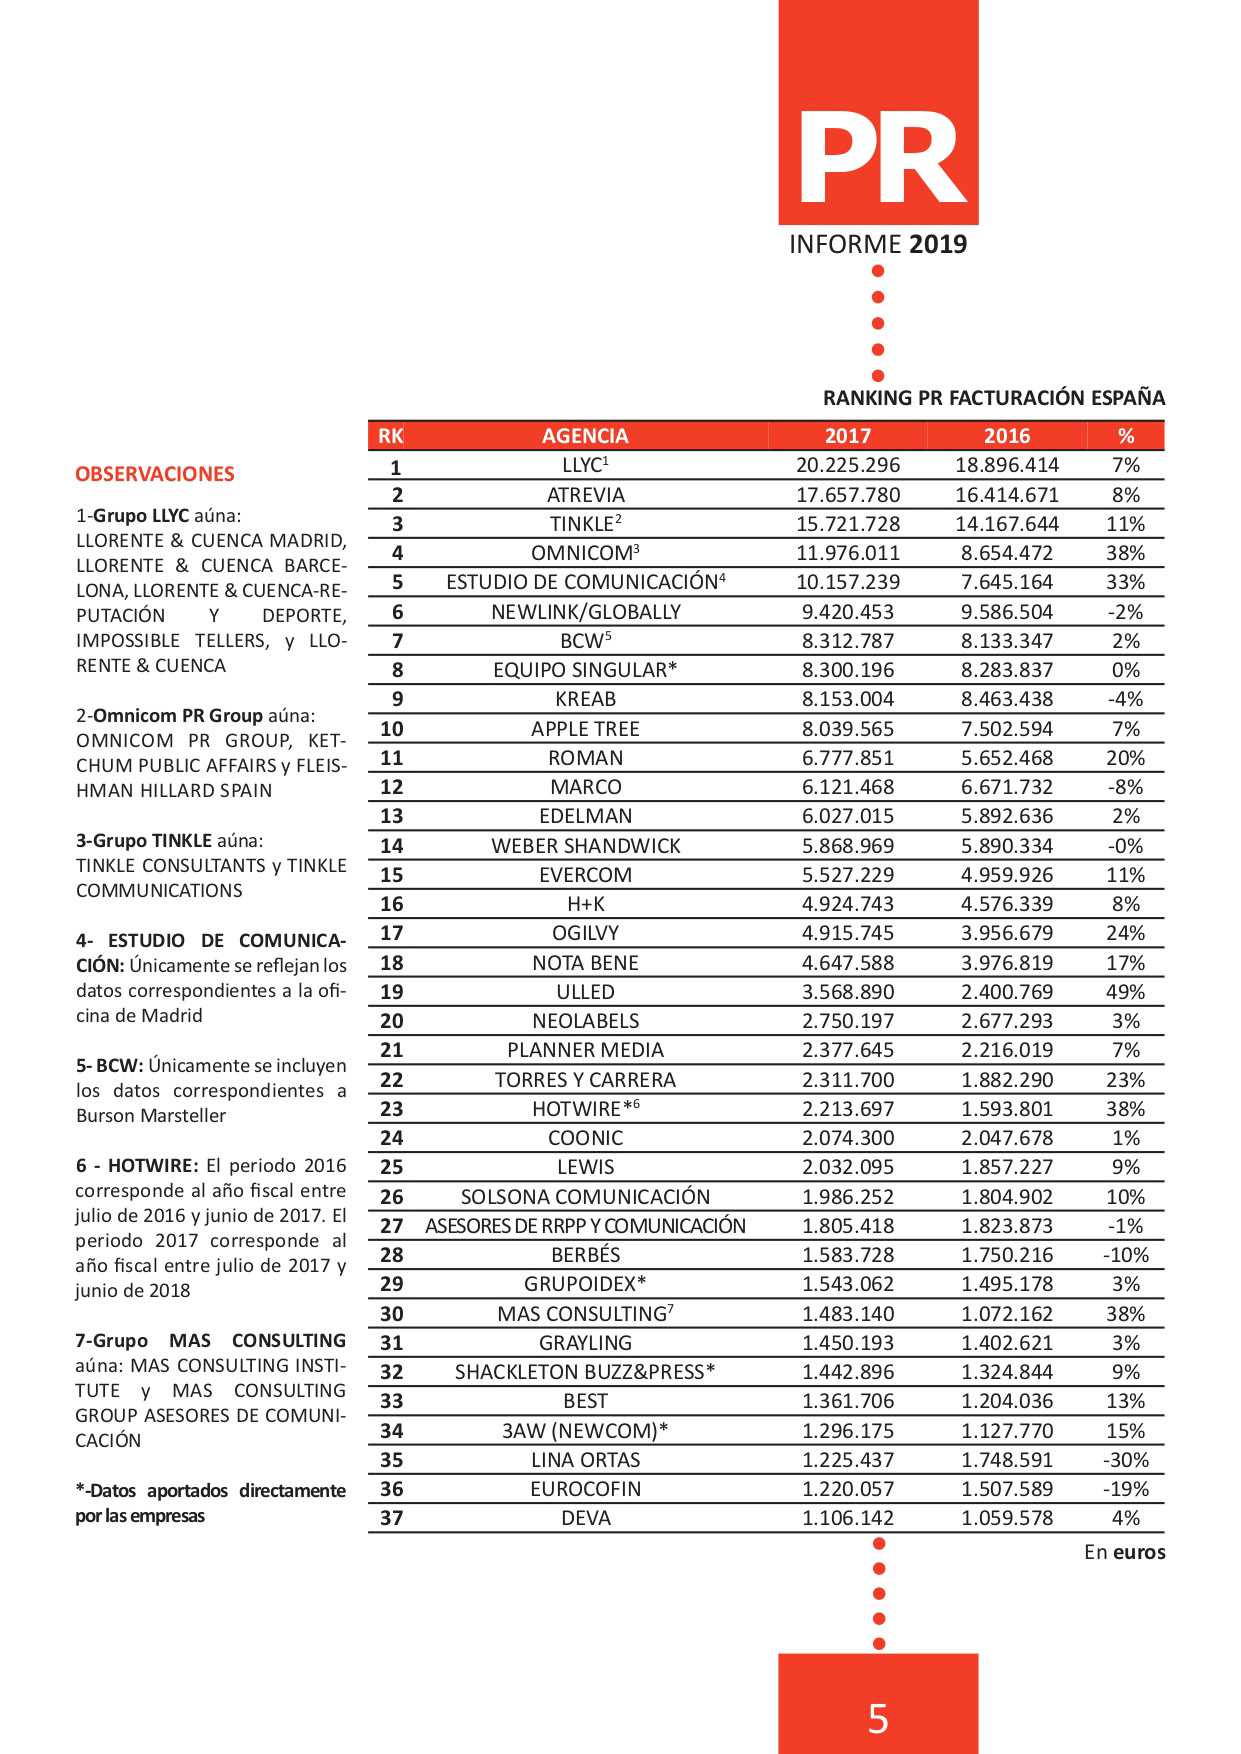 informe_pr_2019_ranking_facturacion_agencias_comunicacion_page-0005.jpg